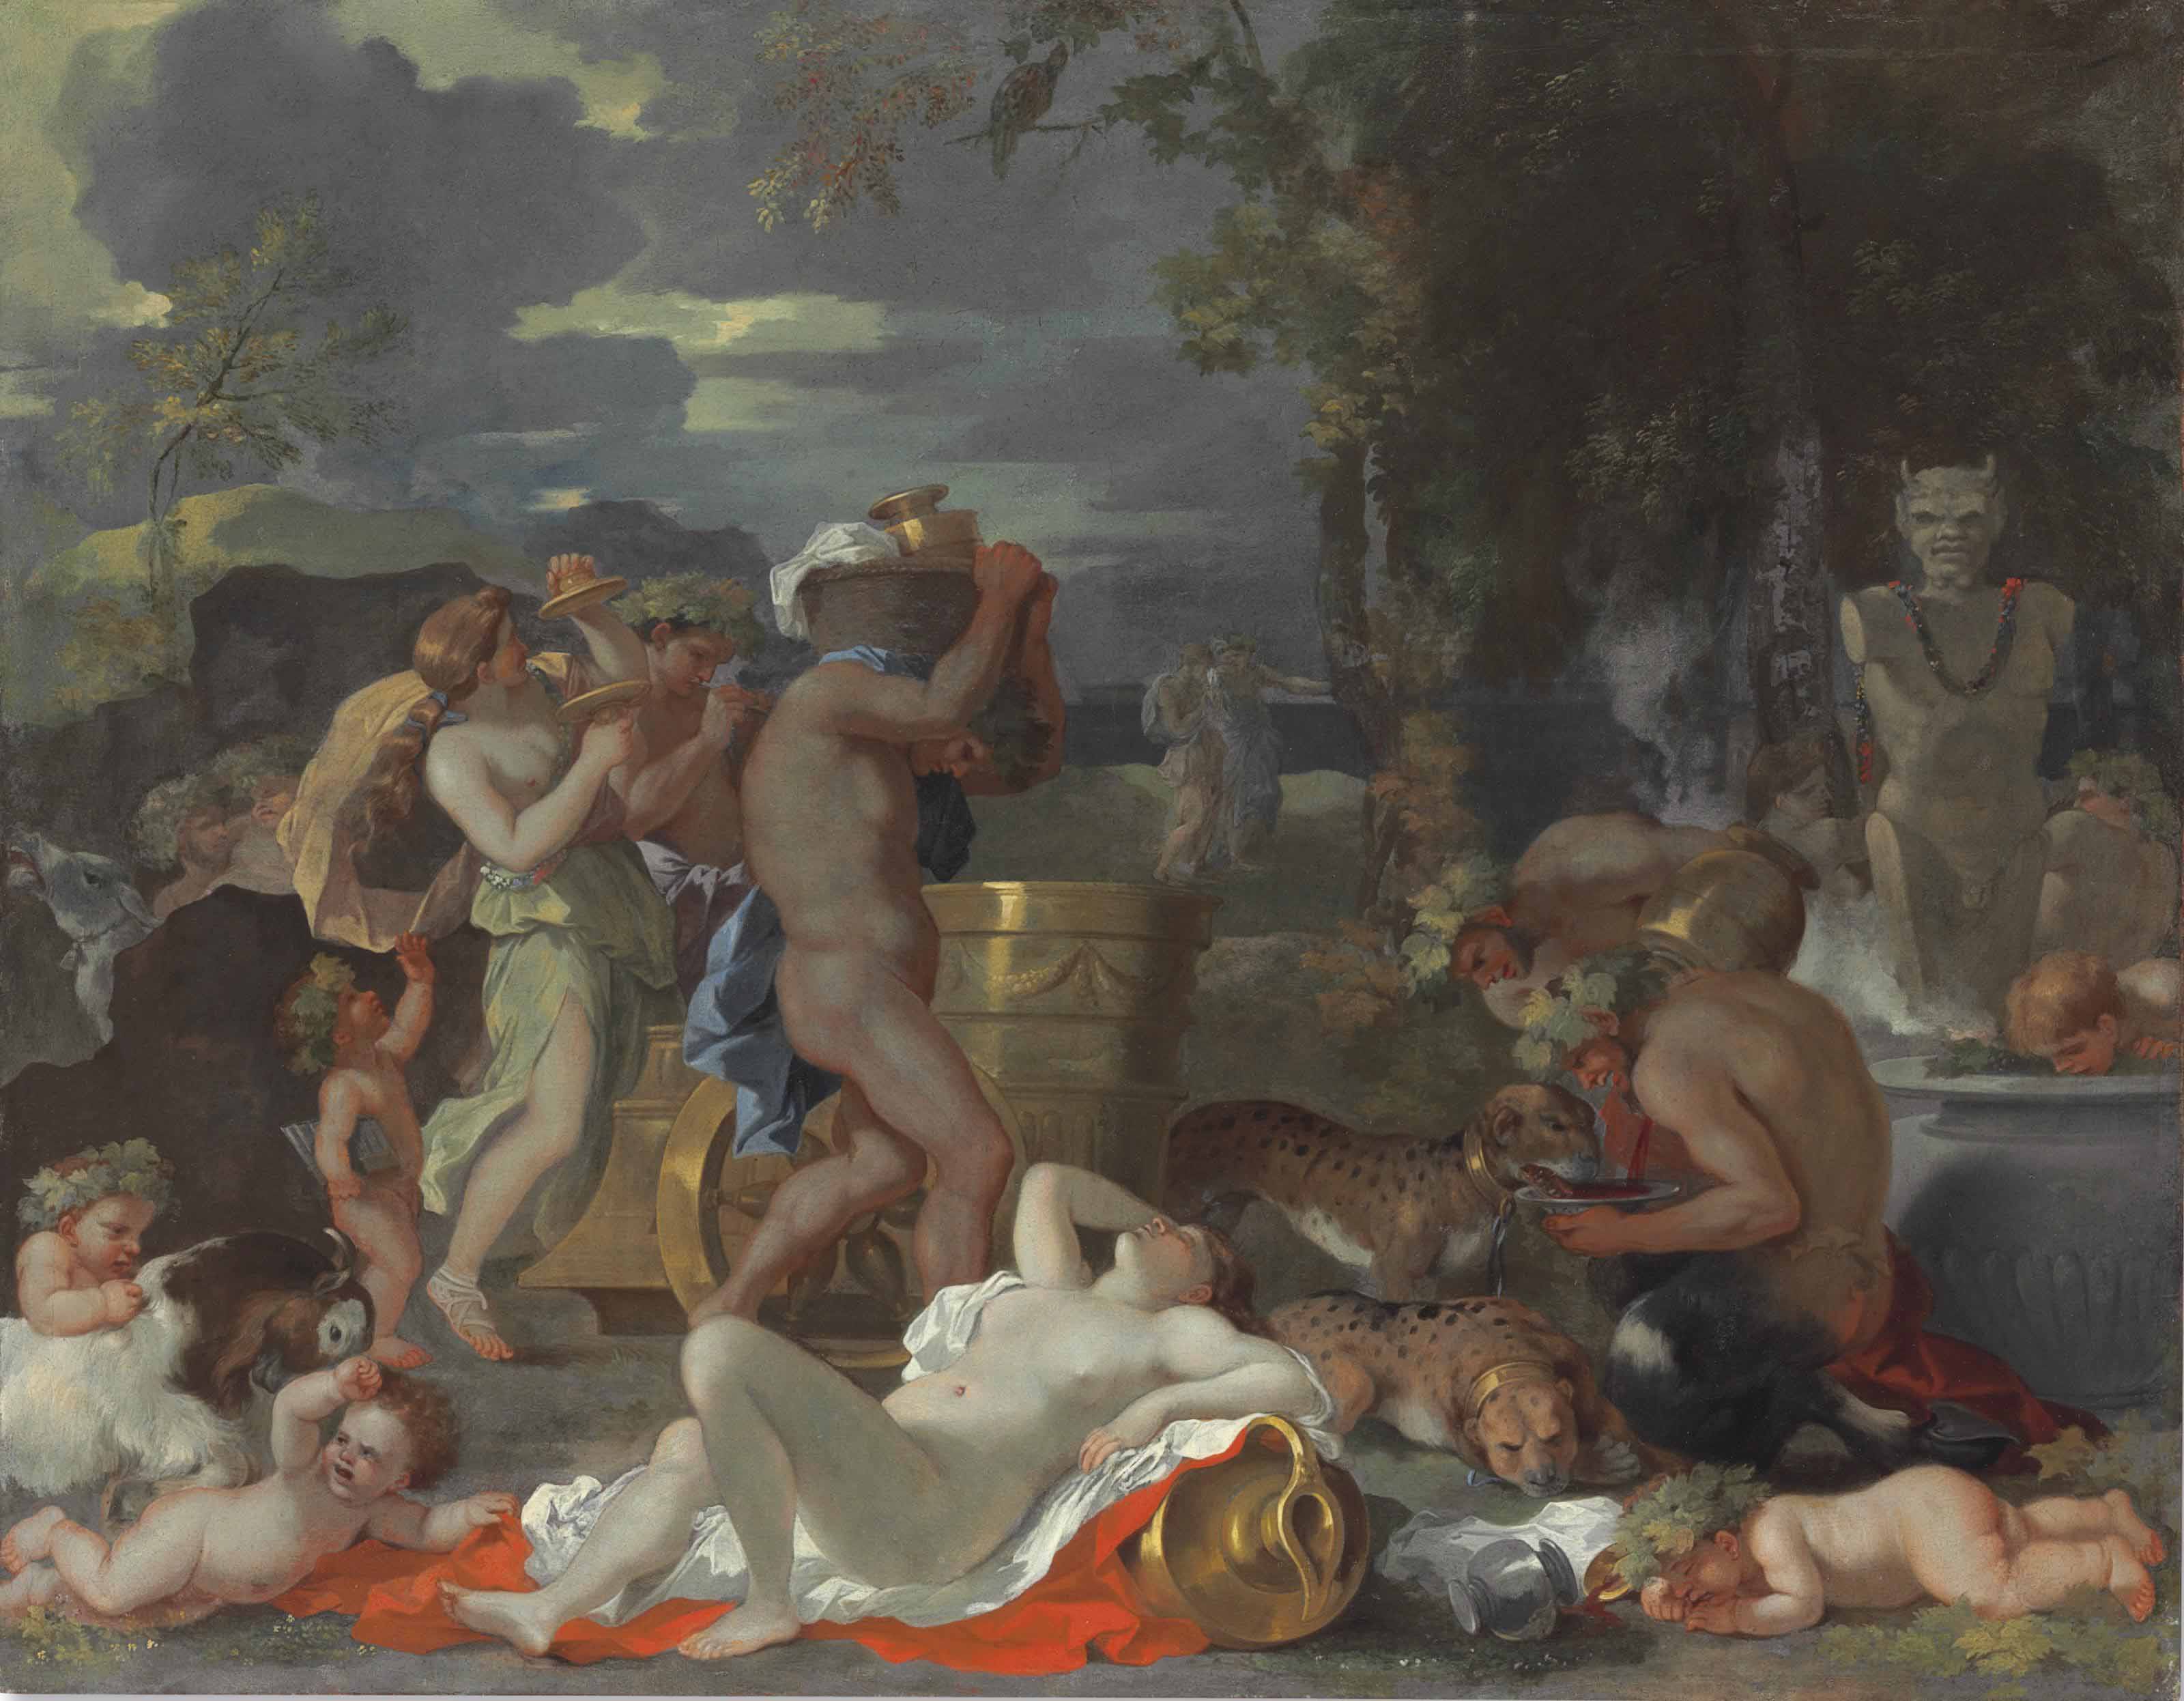 Bacchus and Ariadne on the Island of Naxos, by Sébastien Bourdon